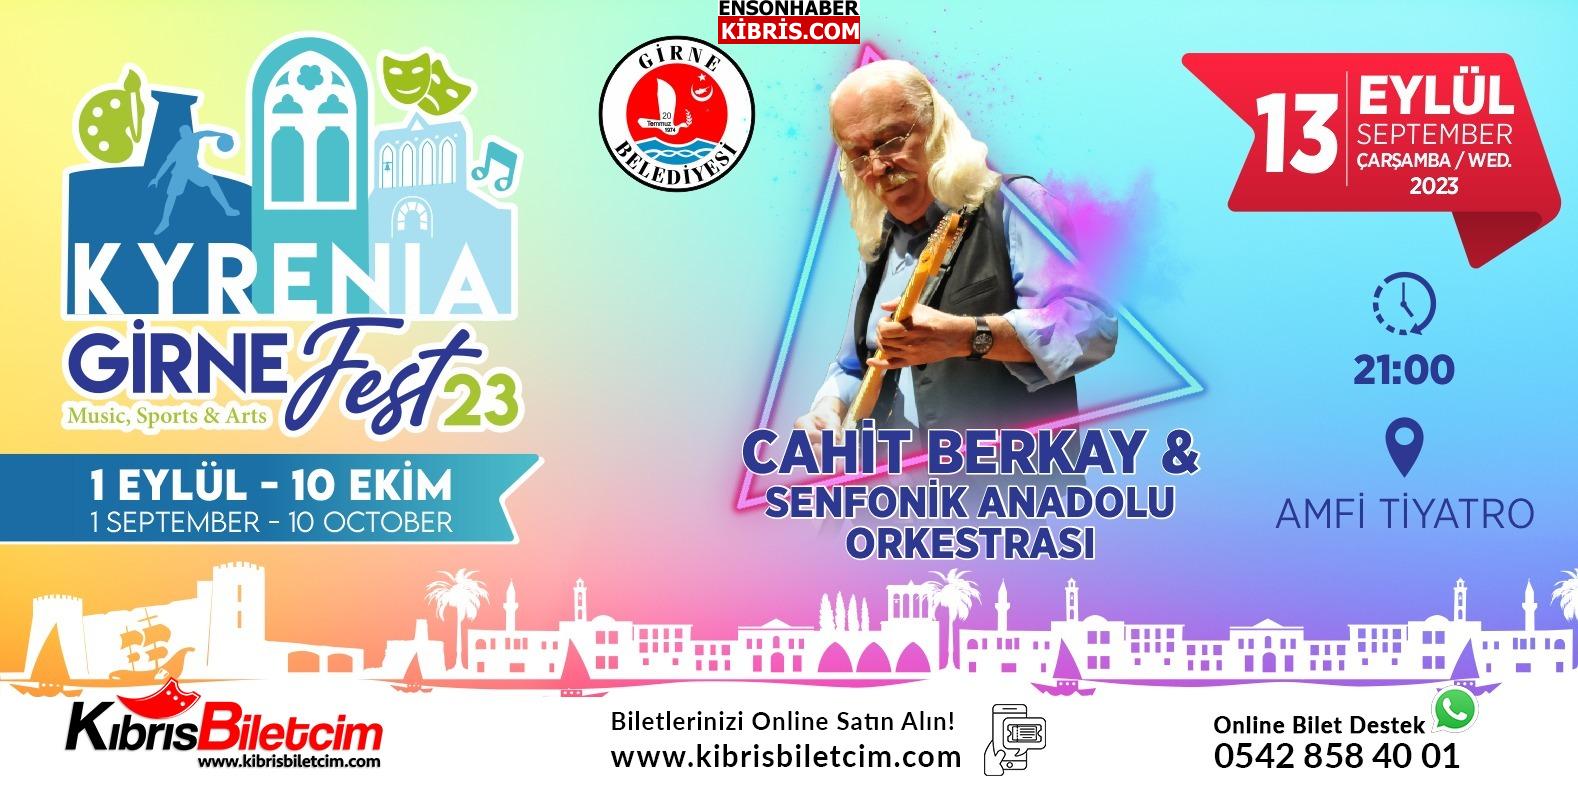 Cahit Berkay & Senfonik Anadolu Orkestrası Konseri